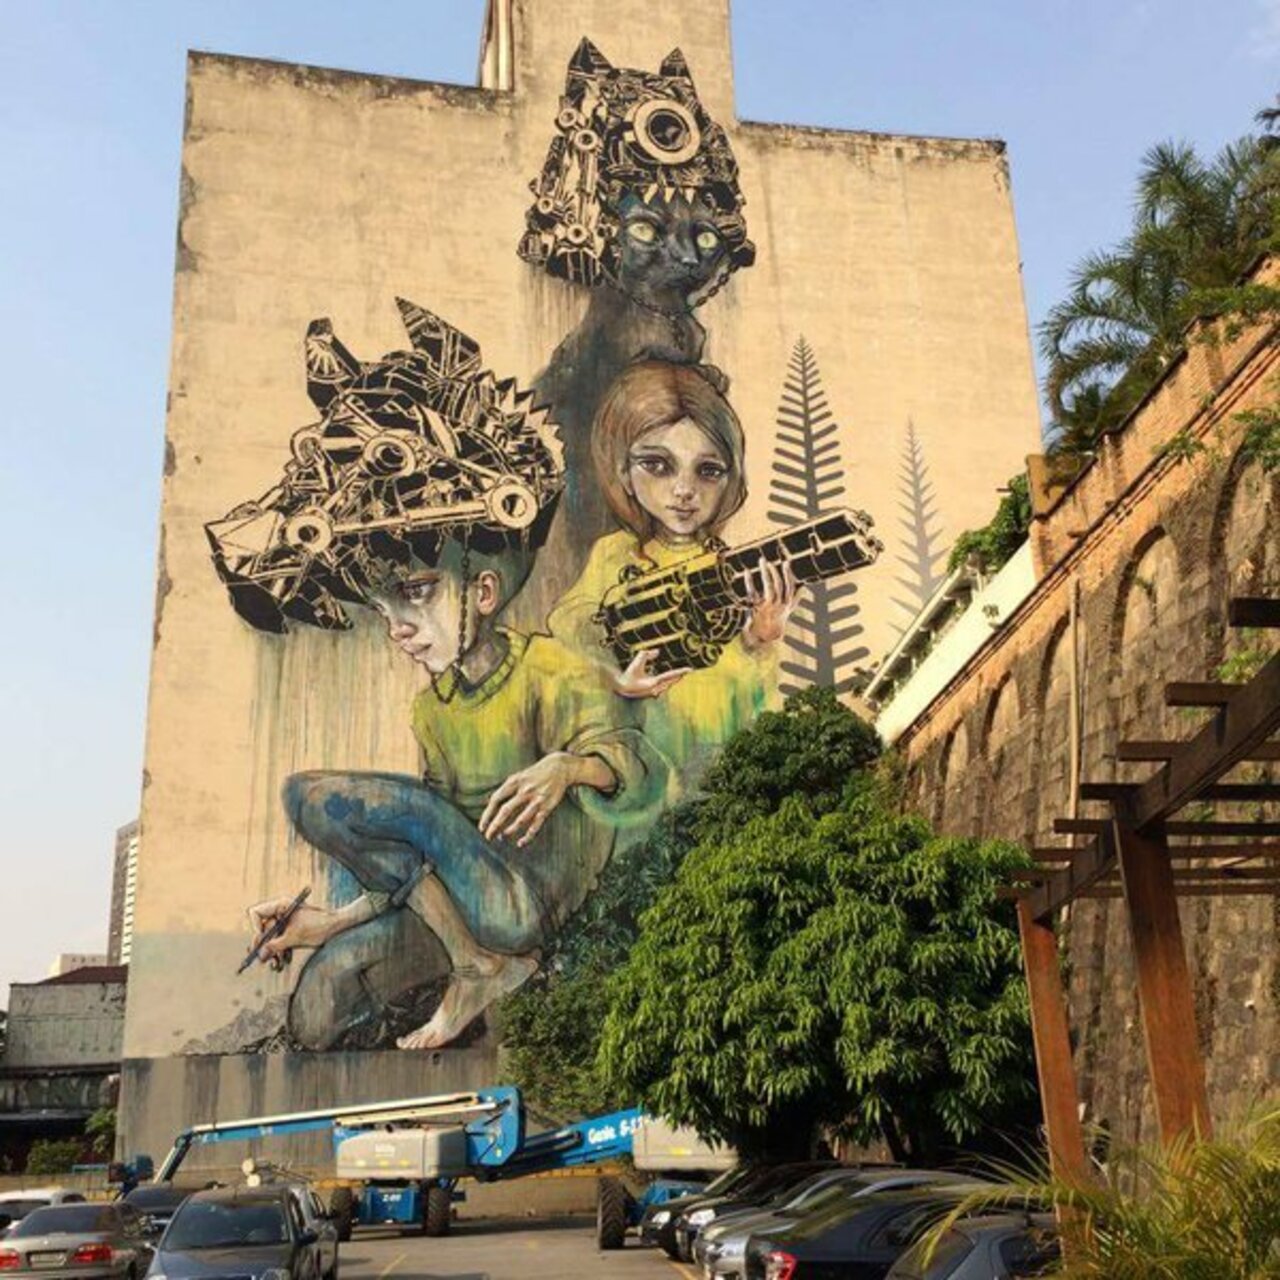 RT @streetartscout: A little haunting, but beautiful! RT @CmoaXWoman: Herakut #streetart #urbanart #art #graffiti https://t.co/6lVq4ITNEN